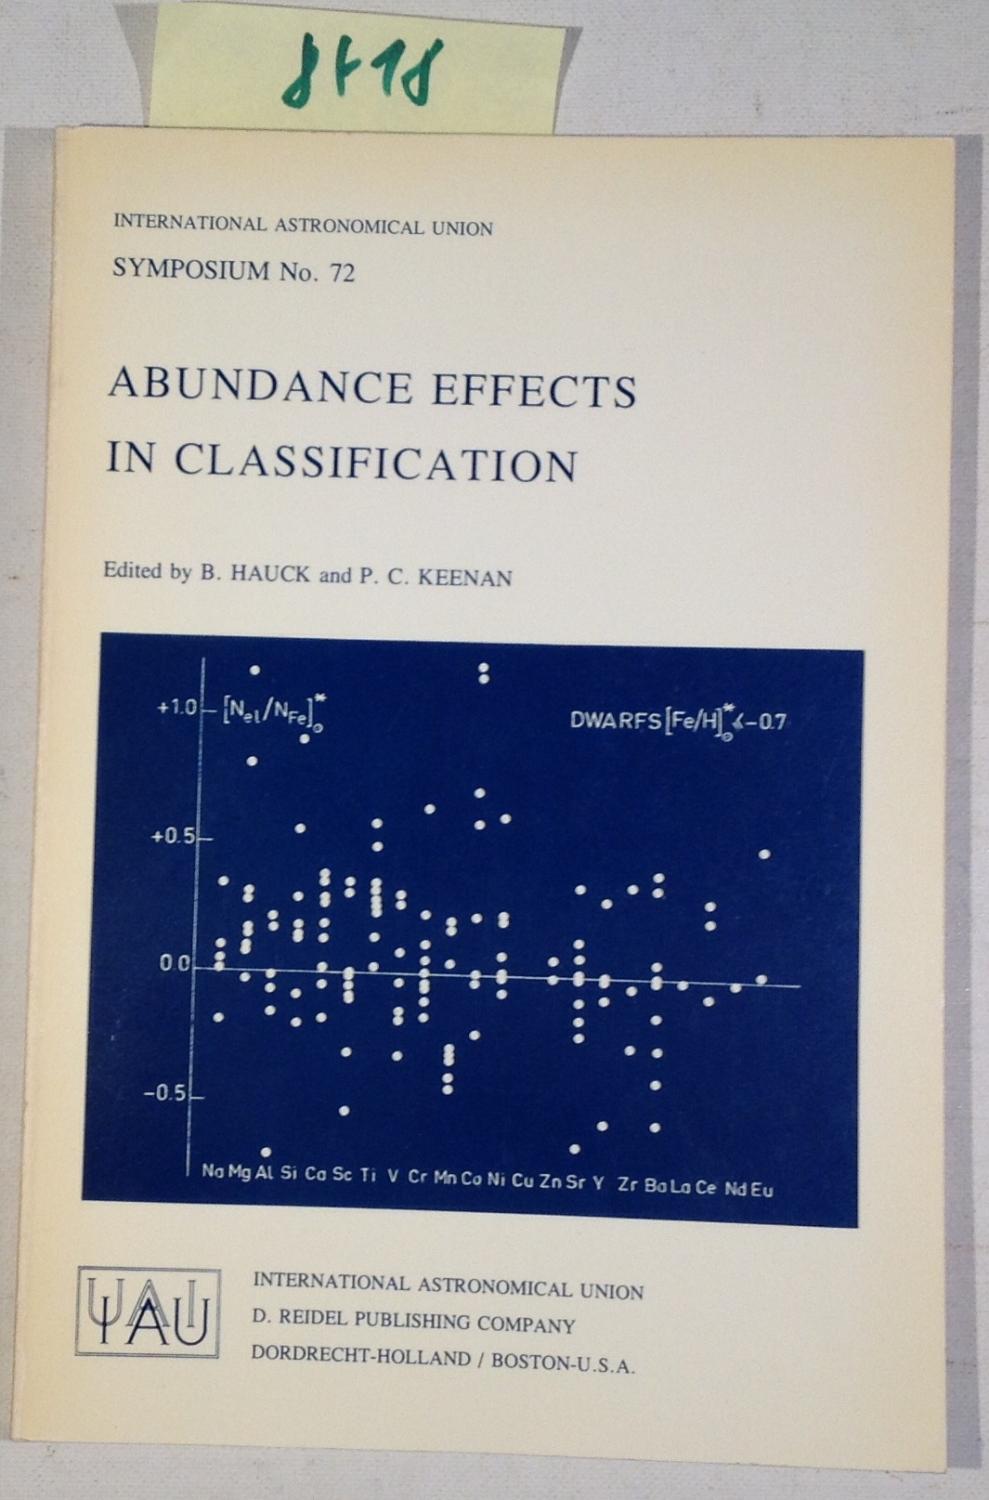 Abundance Effects in Classification : Proceedings of the International Astronomical Union Symposium, No. 72 Held in Lausanne-Dorigny, Switzerland, July 8 - 11, 1975 - Hauck, B. / Keenan, P. C. - Editors